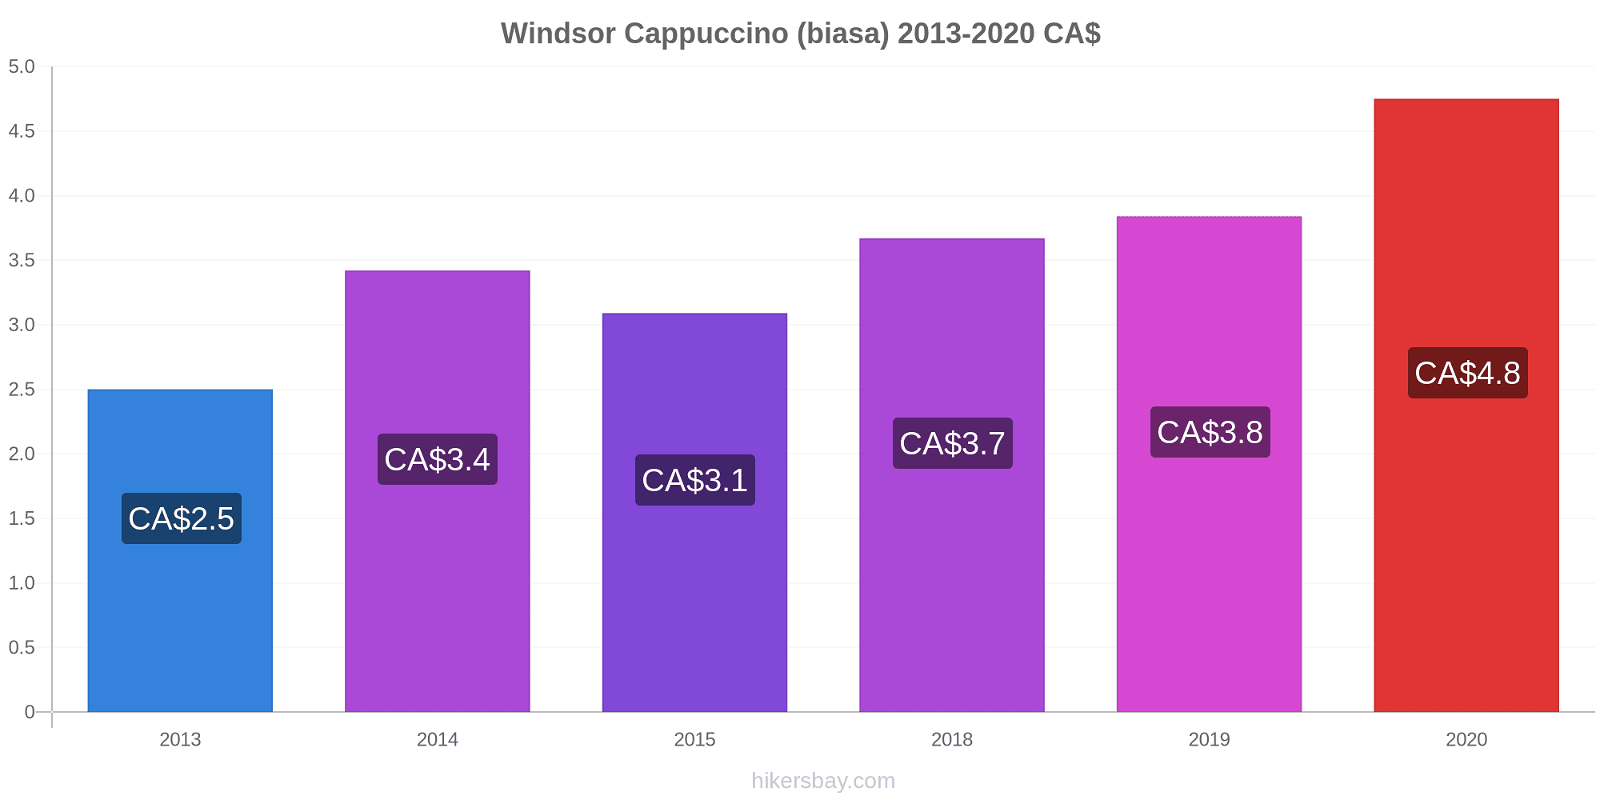 Windsor perubahan harga Cappuccino (biasa) hikersbay.com